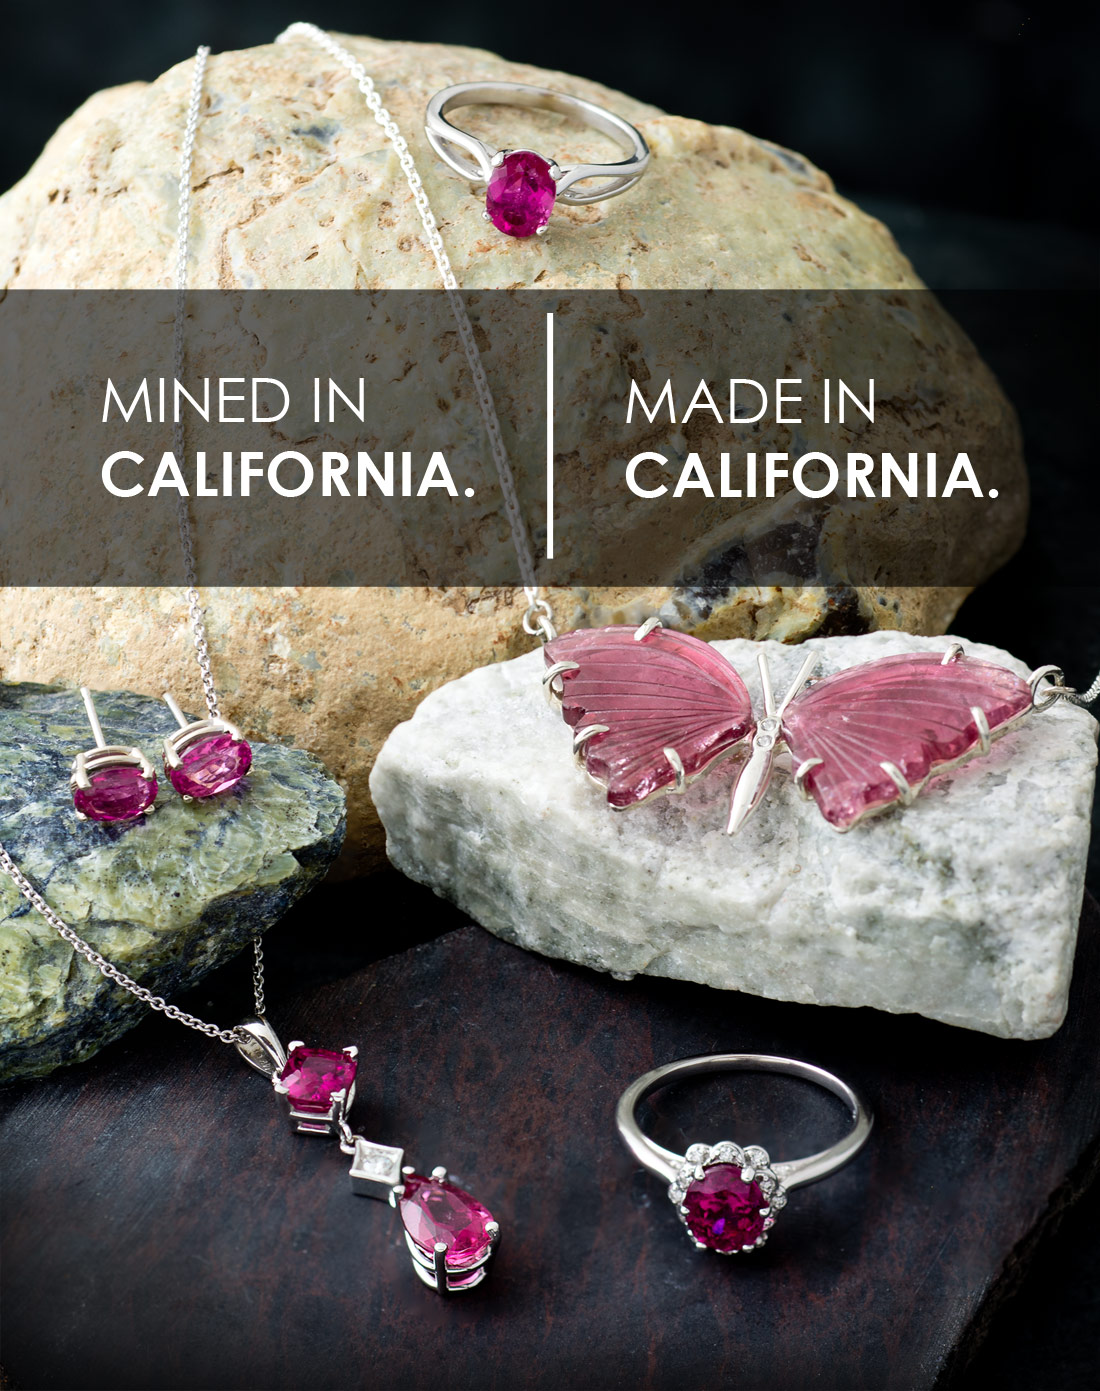 California tourmaline jewelry